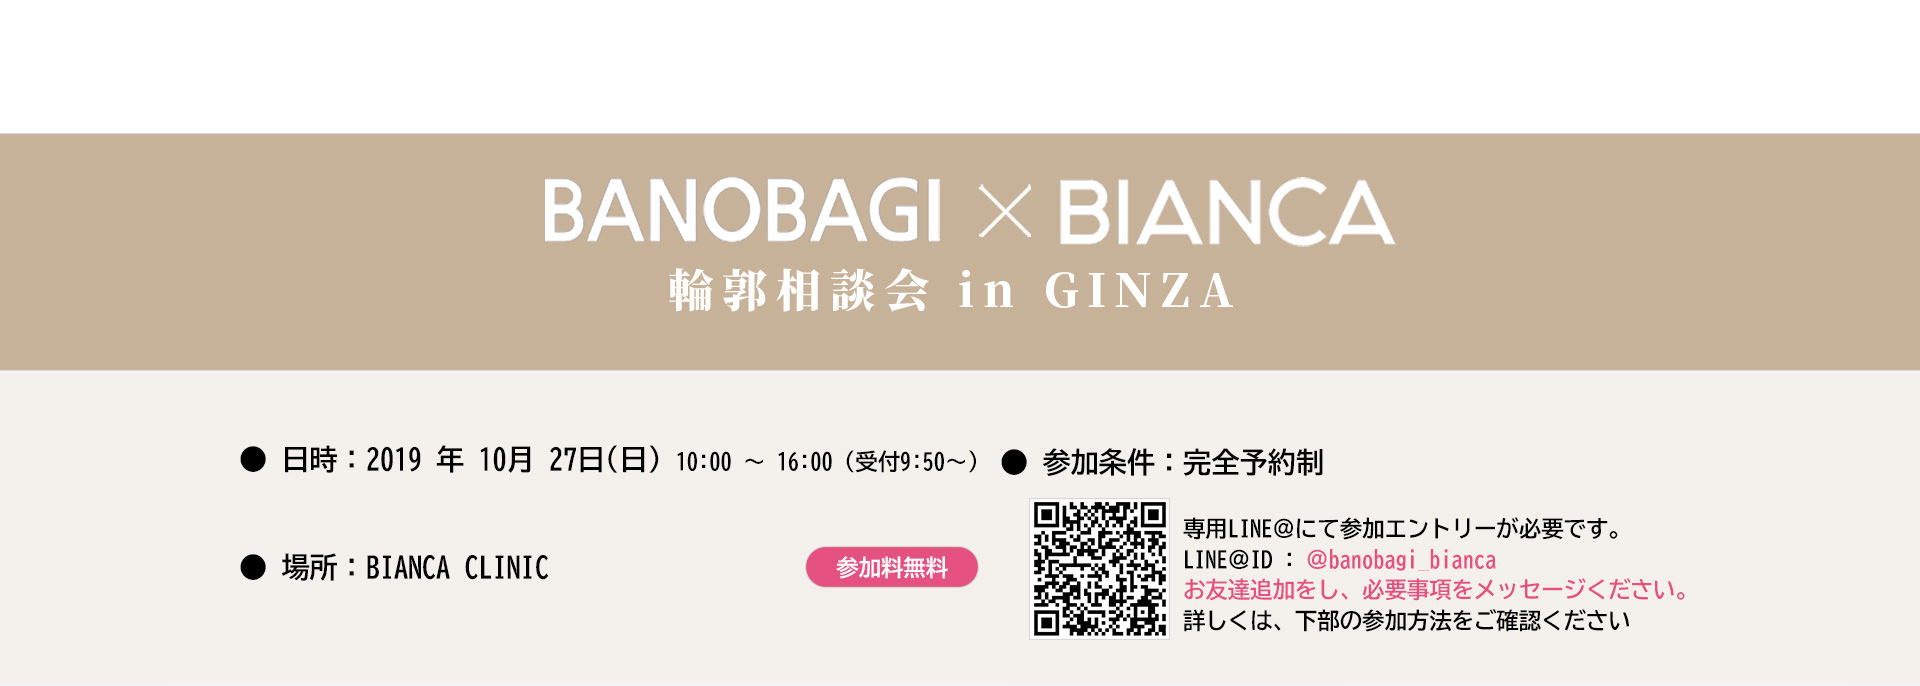 BANOBAGI X BIANCA 輪郭相談会 in GINZA